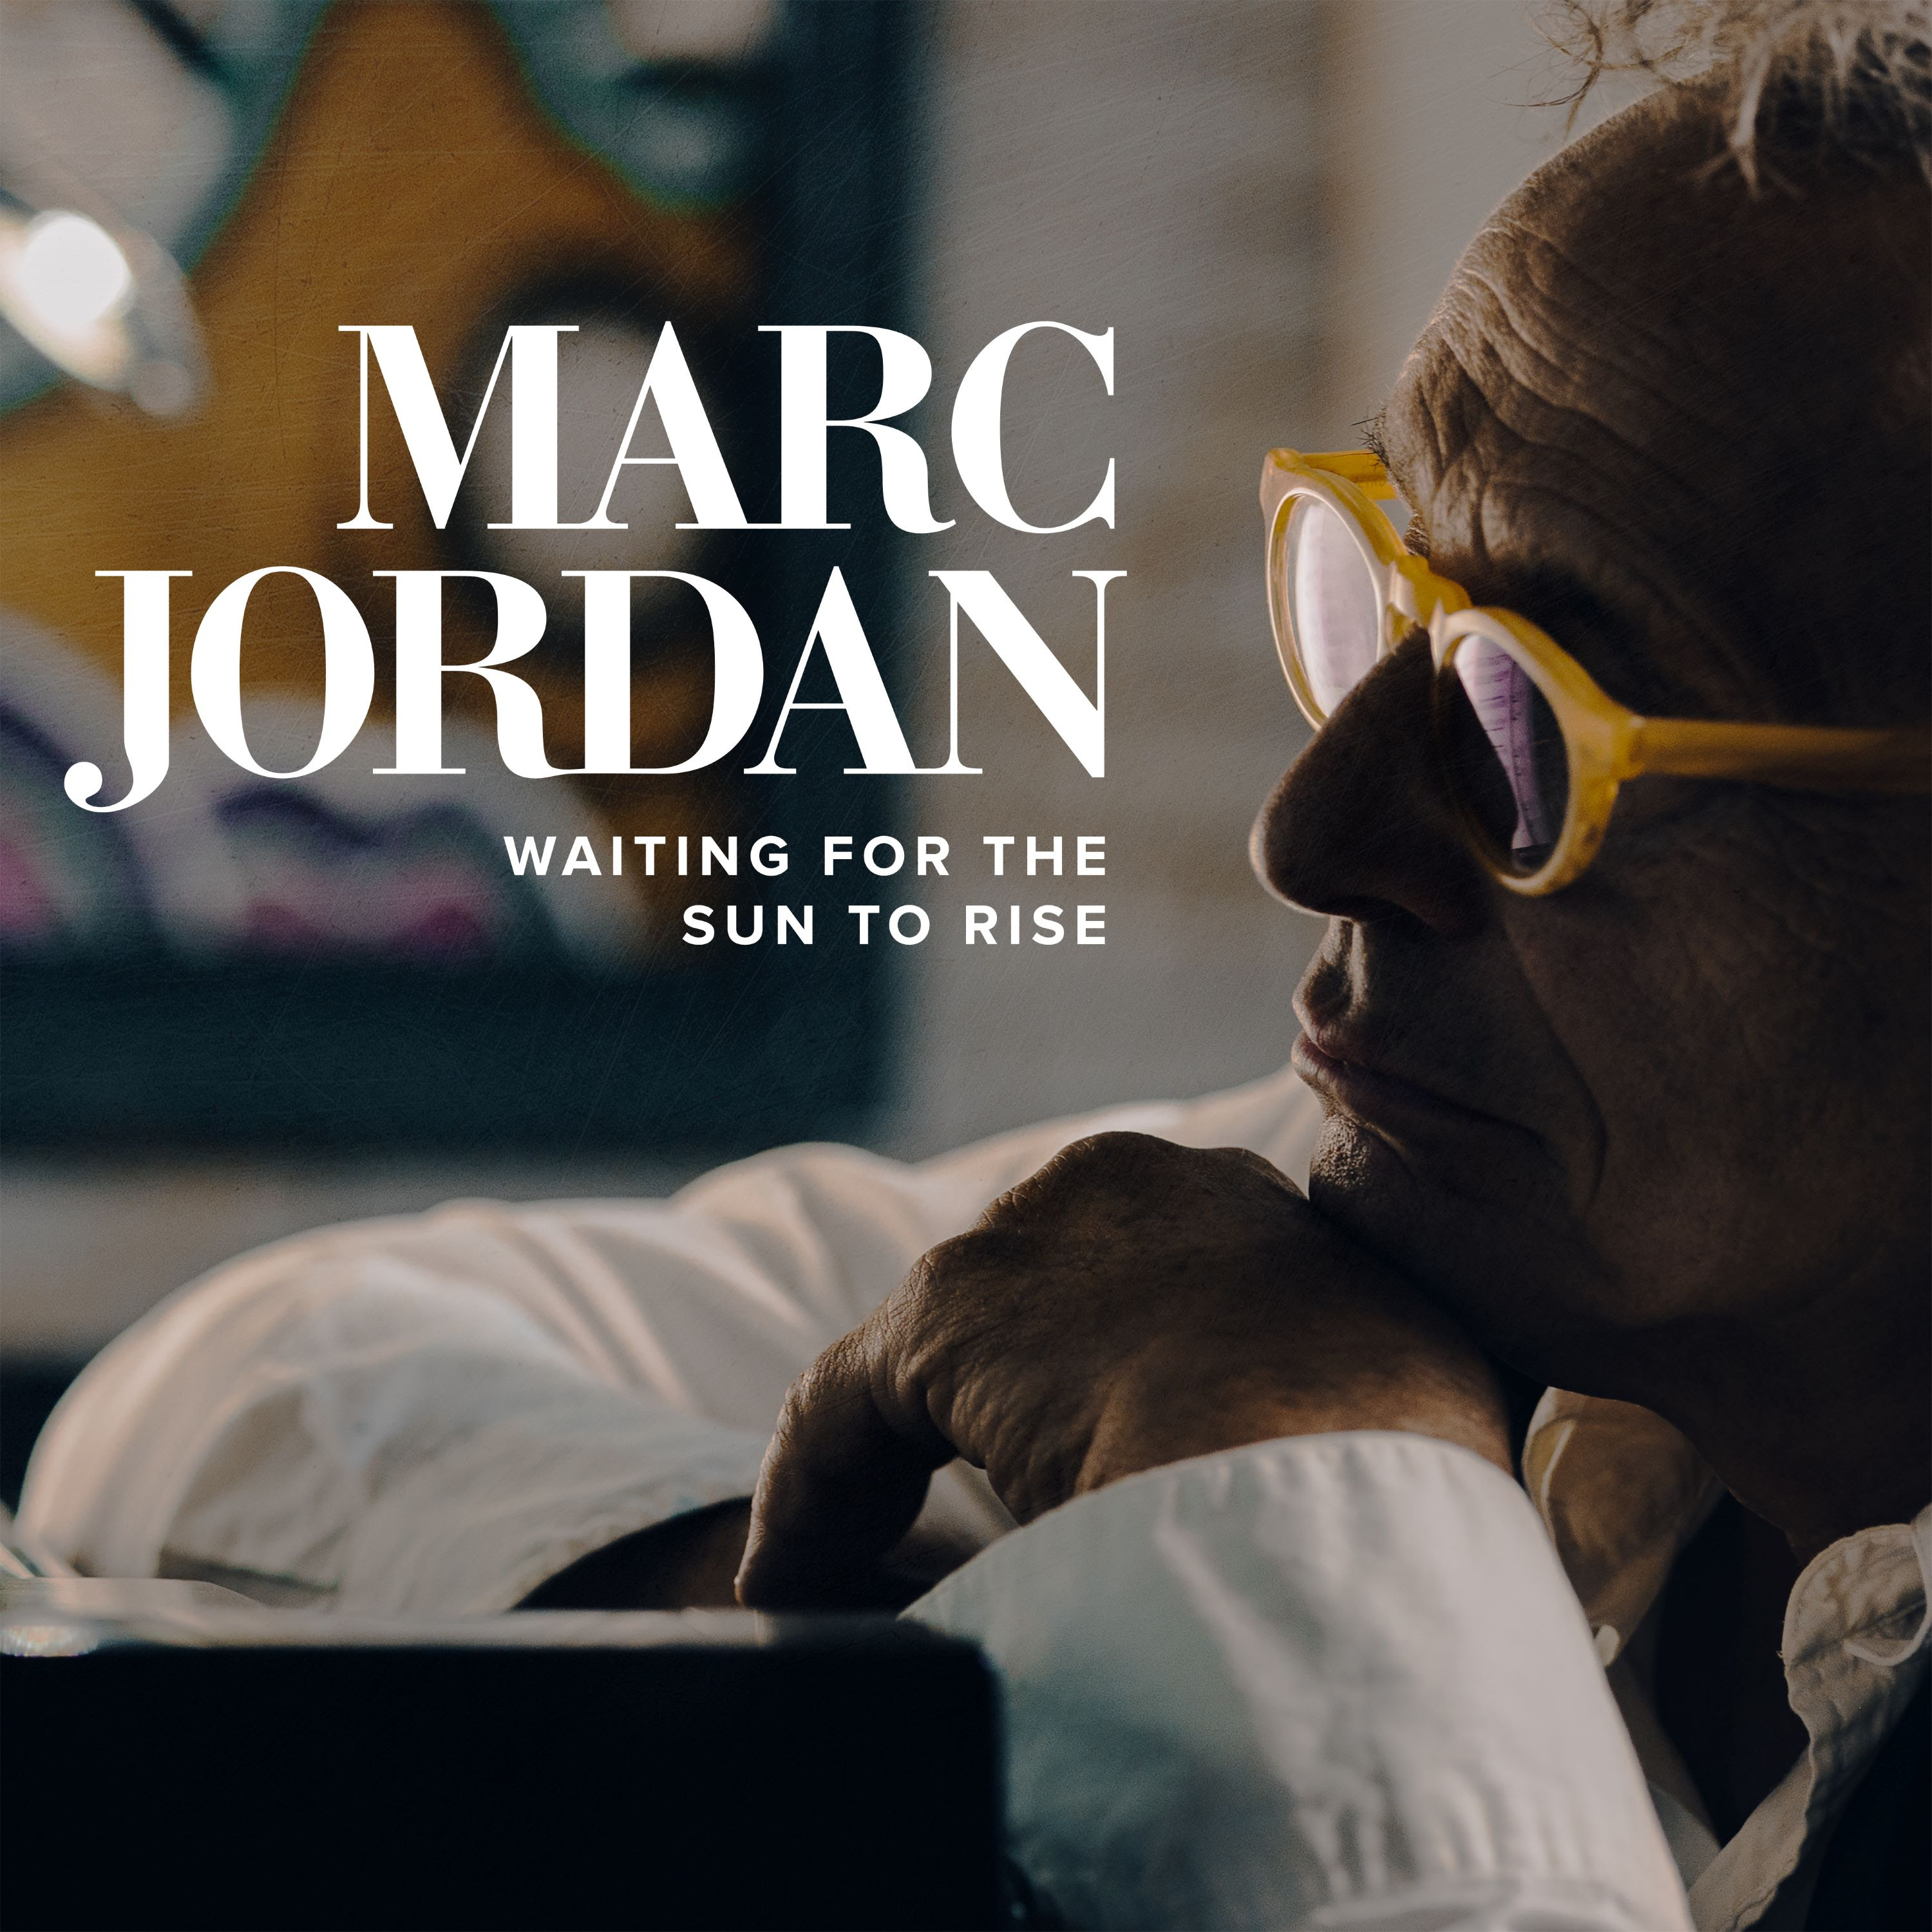 Globally Renowned Master Songwriter Marc Jordan Releases New Album